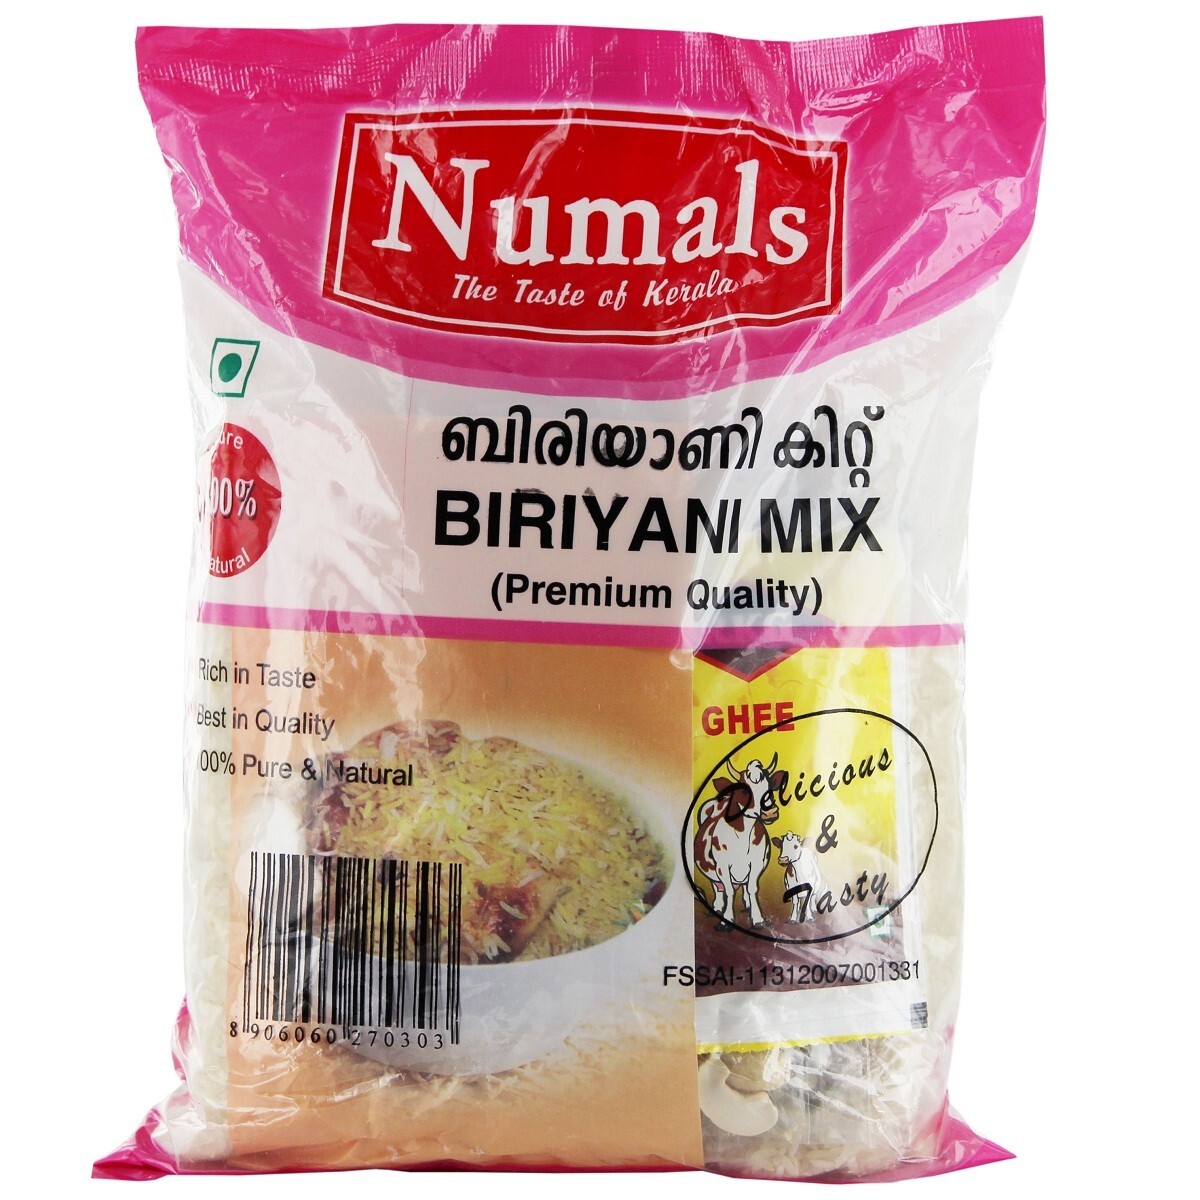 Numals Biriyani Kit 1kg